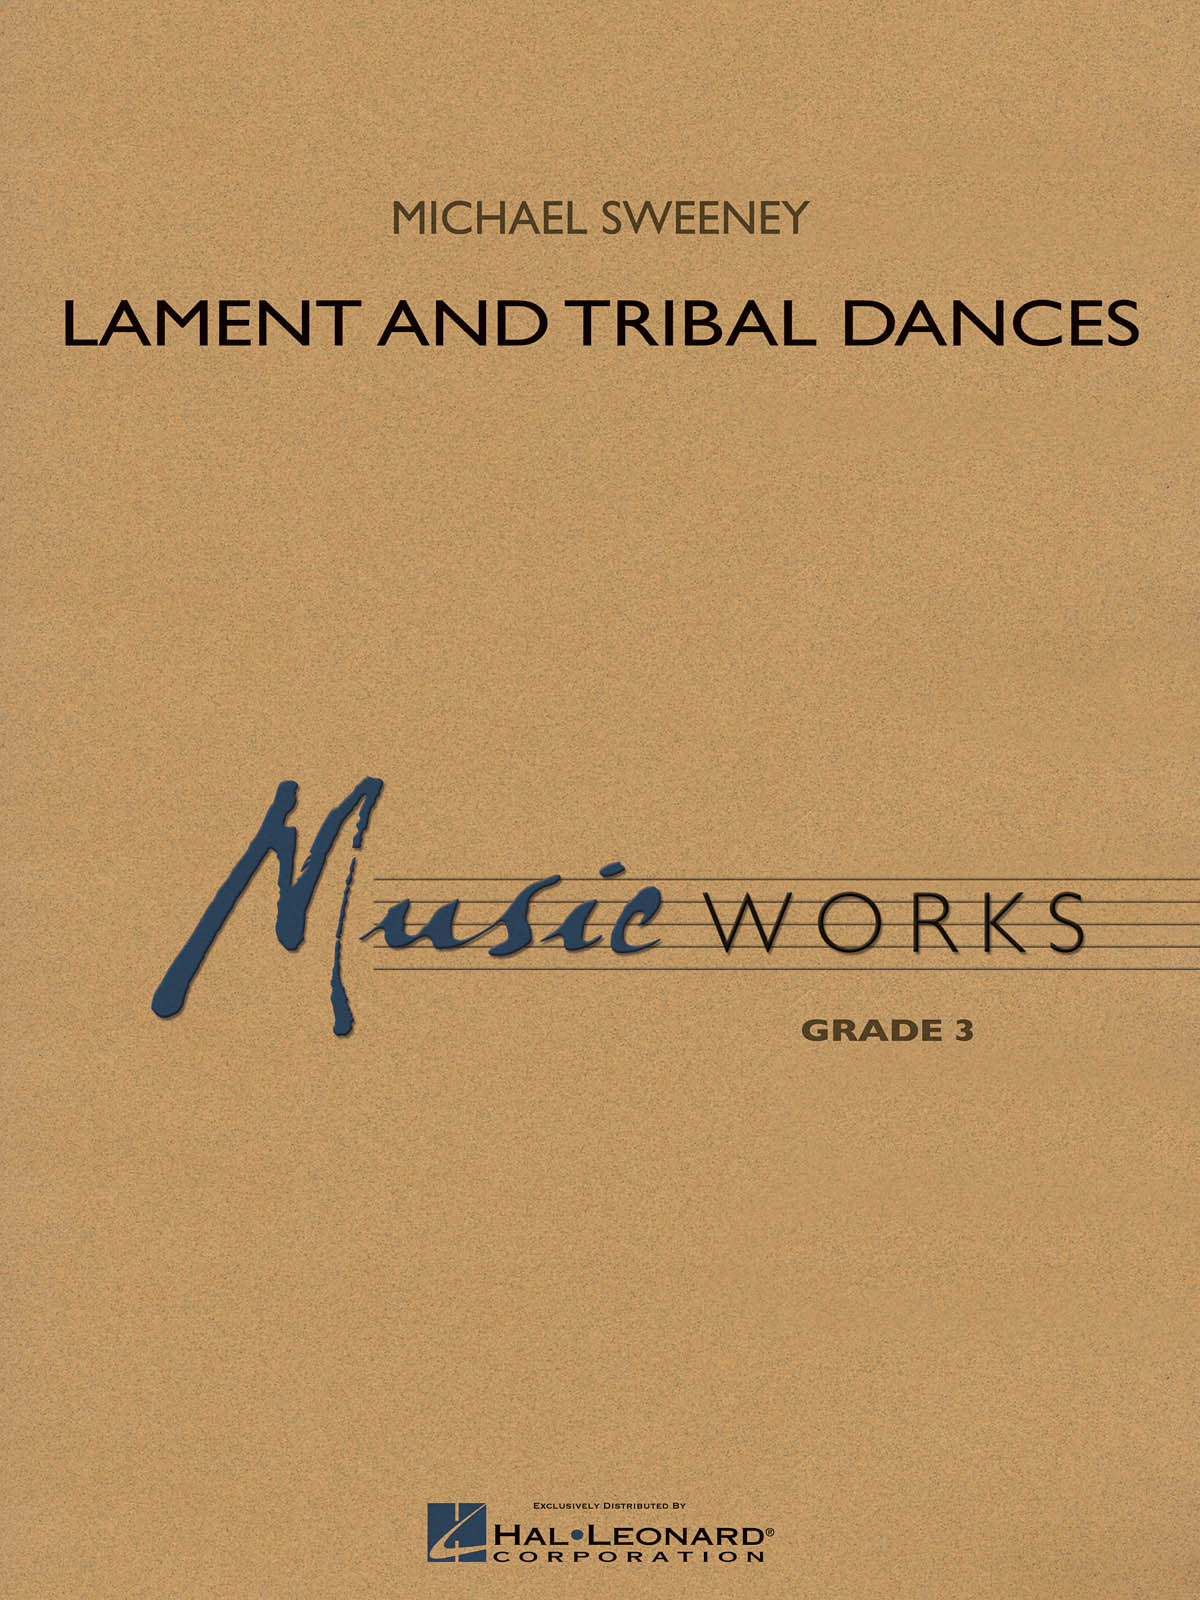 Michael Sweeney: Lament and Tribal Dances